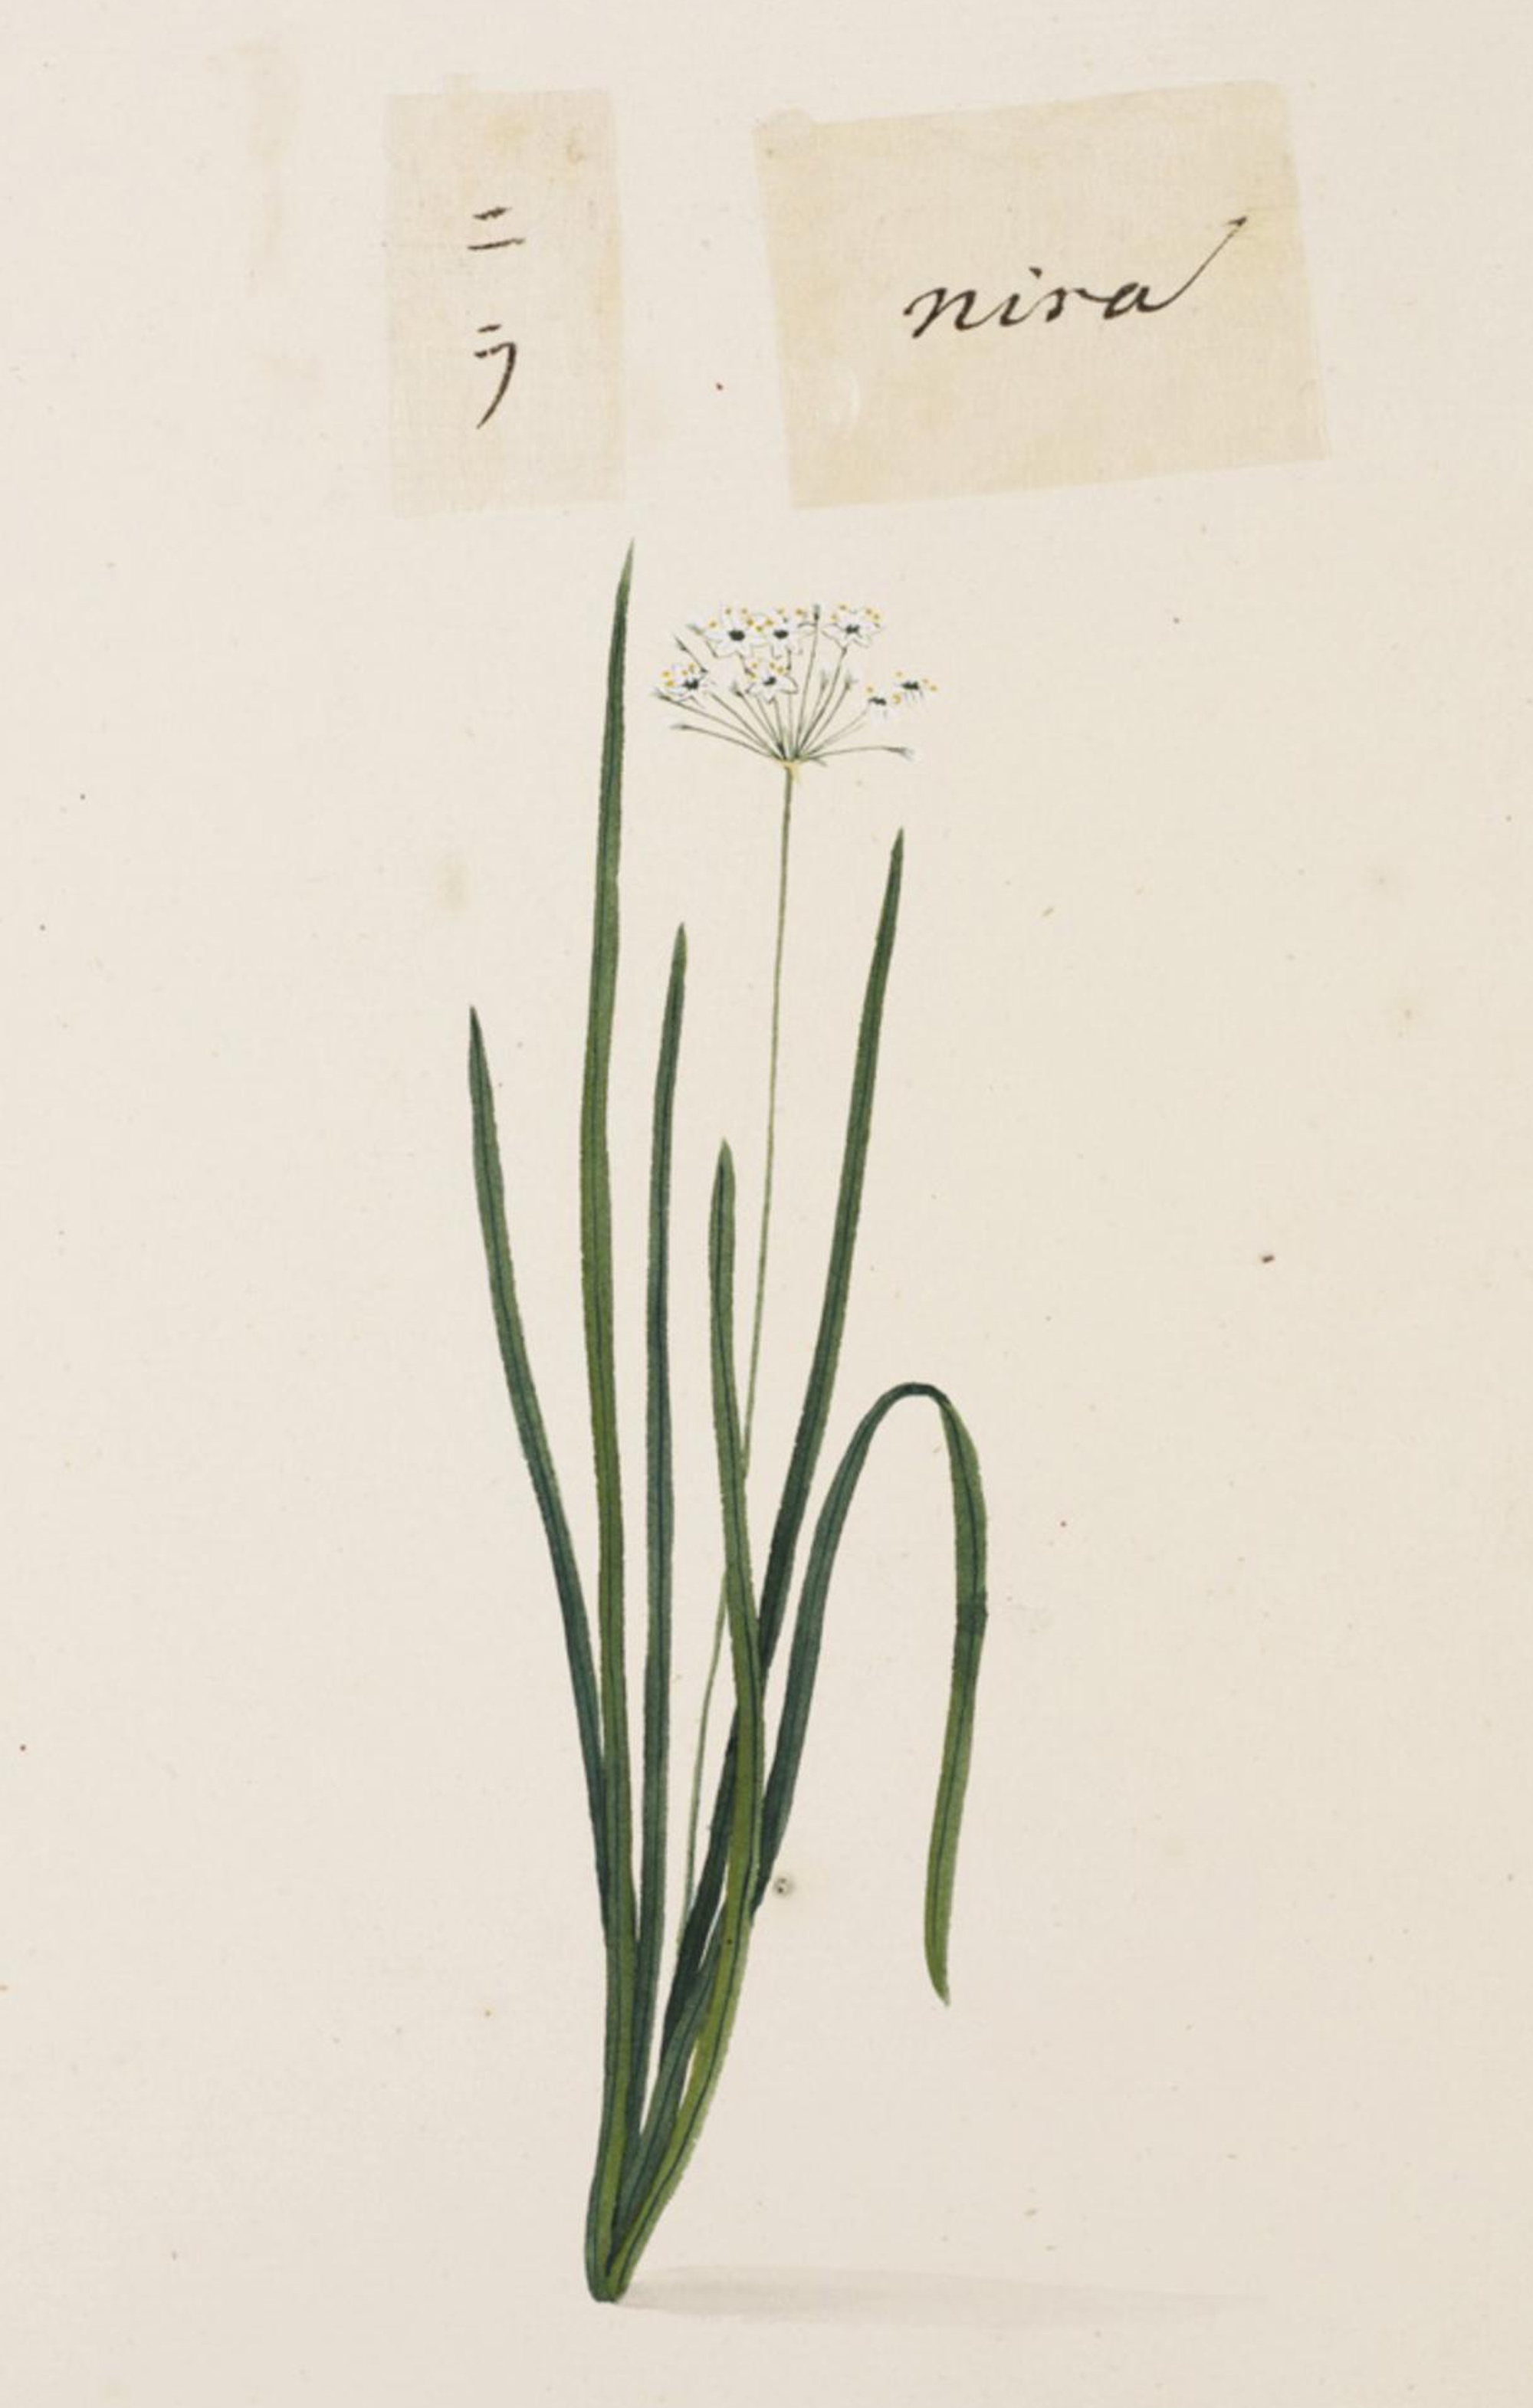  Garlic Chive (Allium tuberosum) illustration from Nagasaki, Japan  circa 1823-1829.